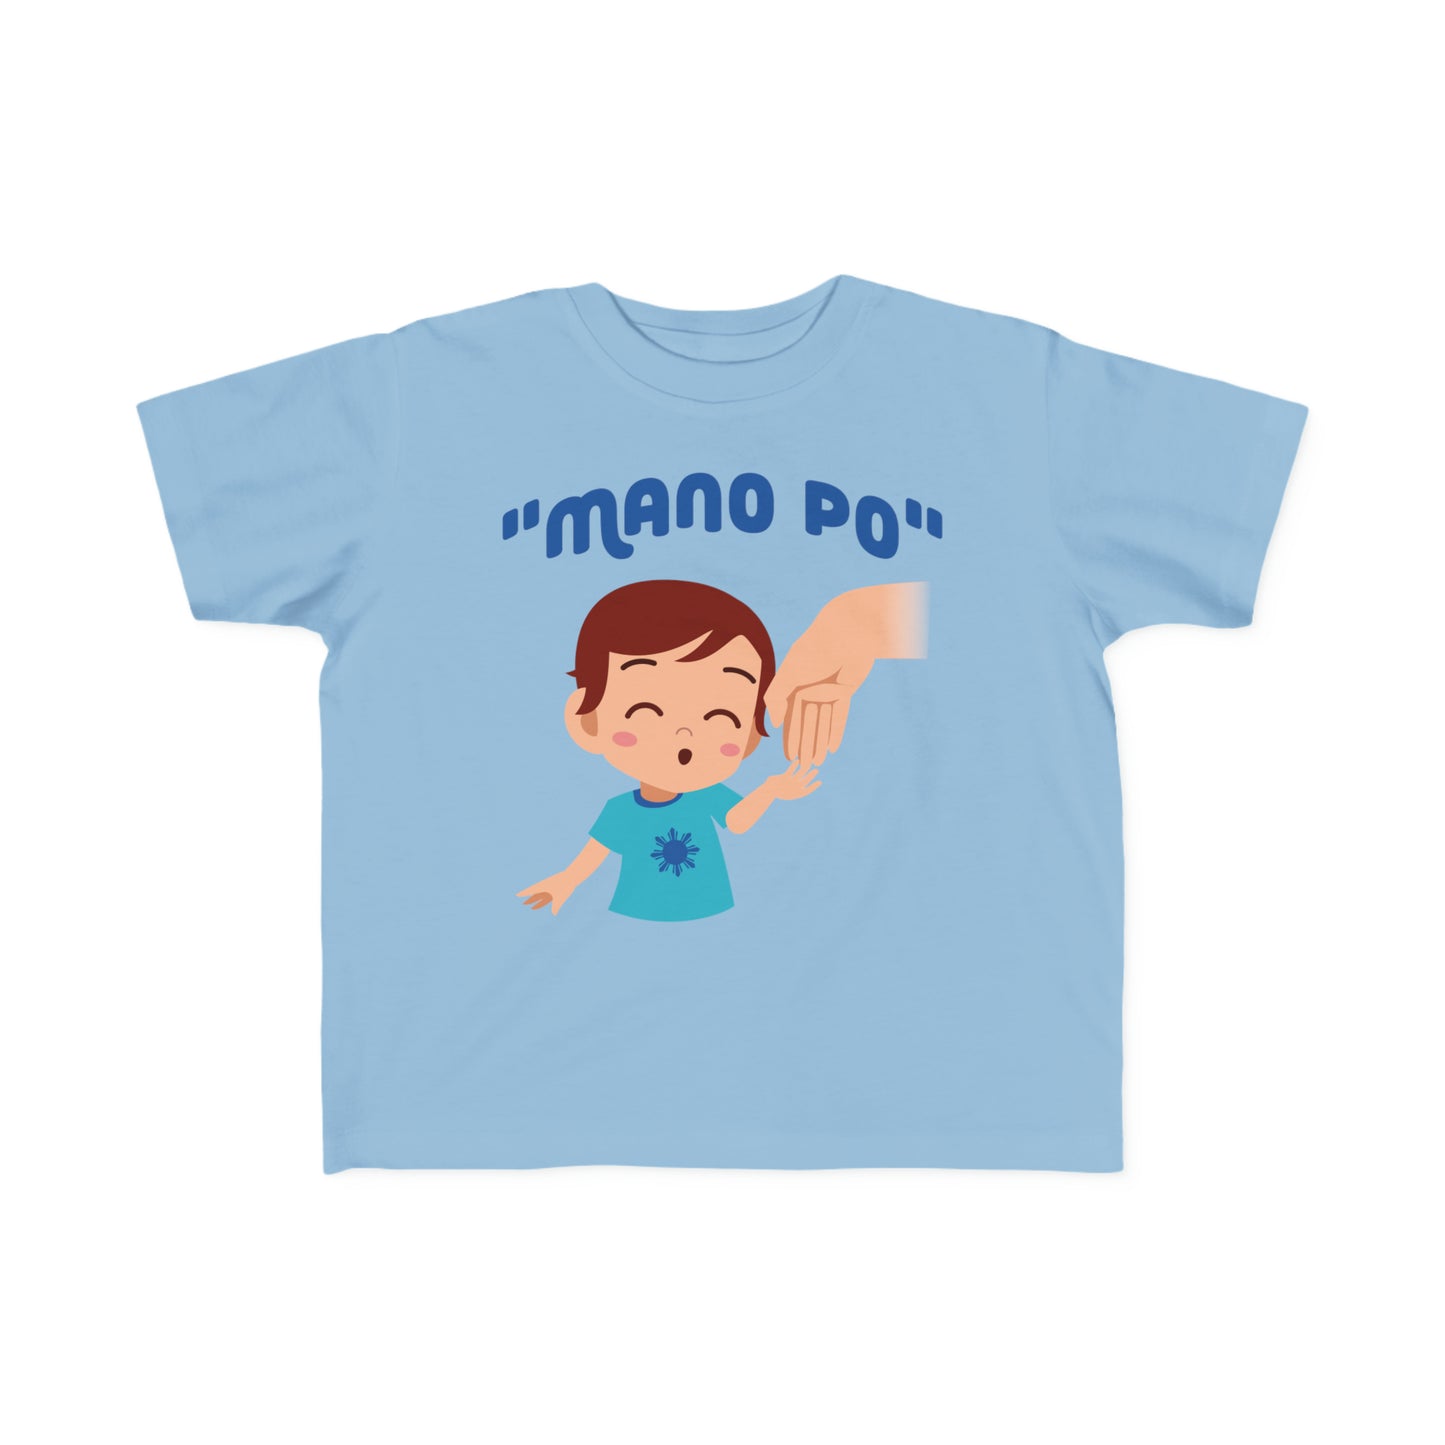 "MANO PO" Boy Toddler's Fine Jersey Tee